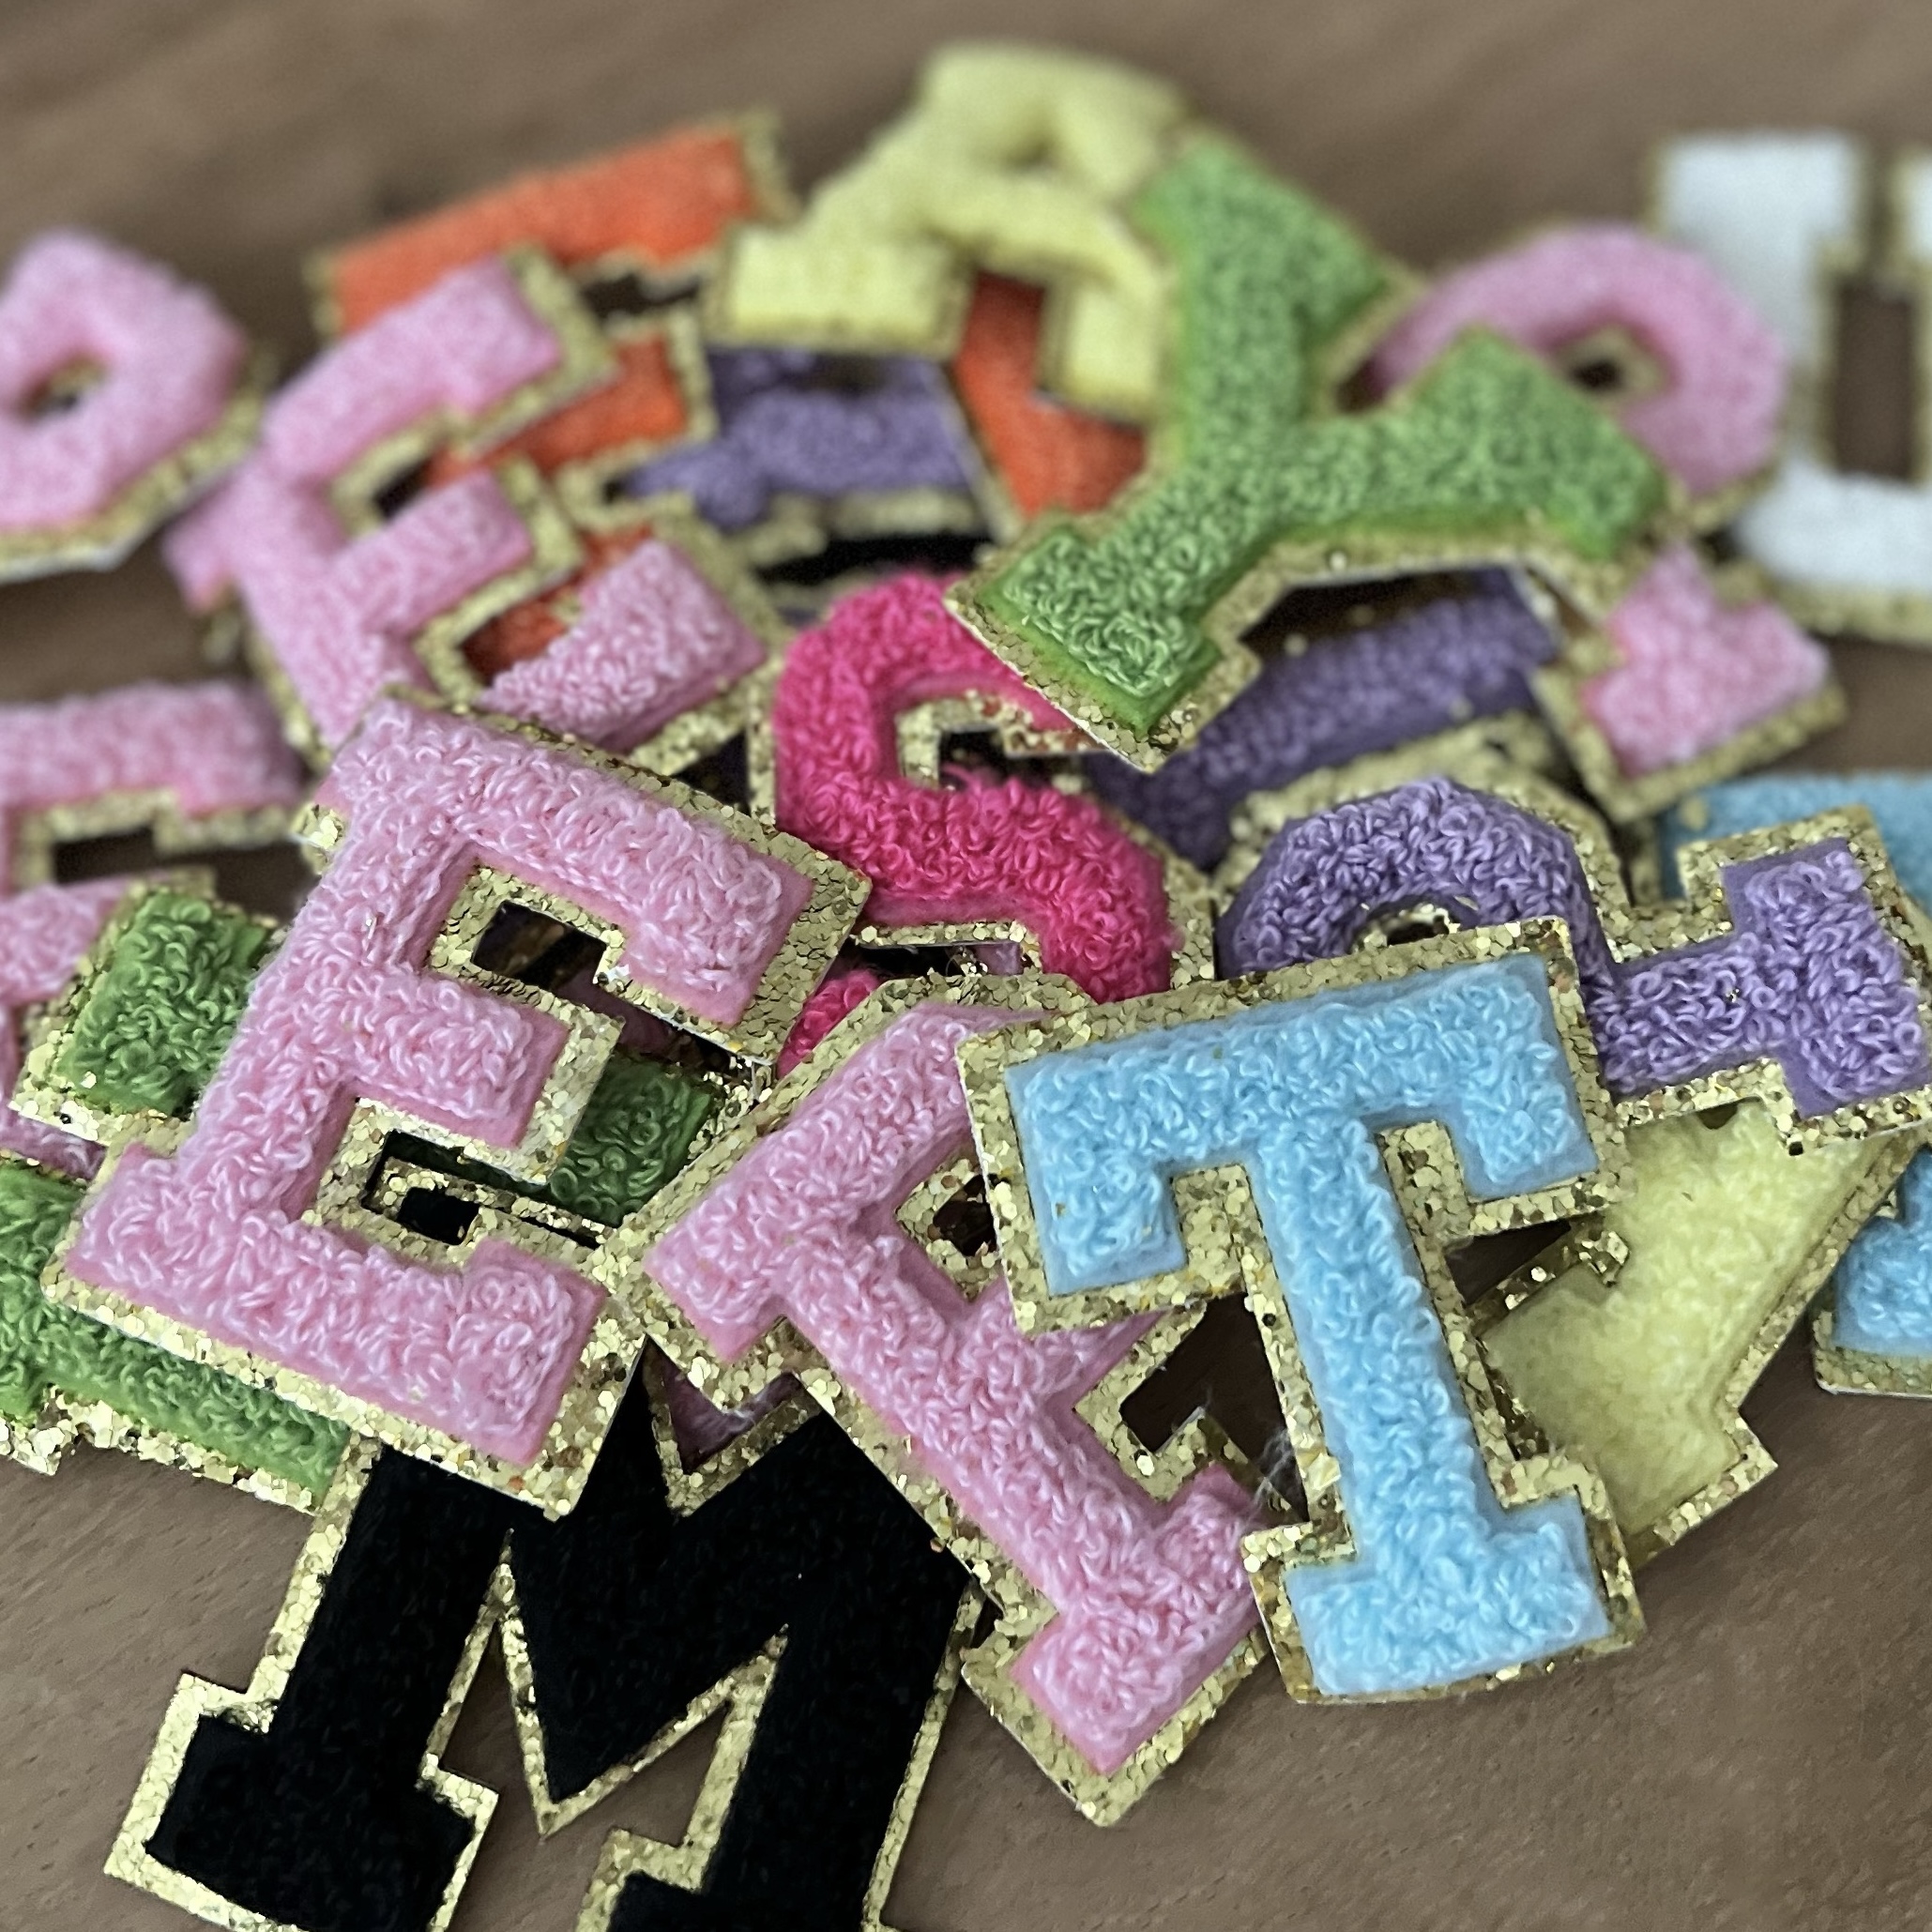 Glue On Glitter Alphabet Letters - Trimming Shop